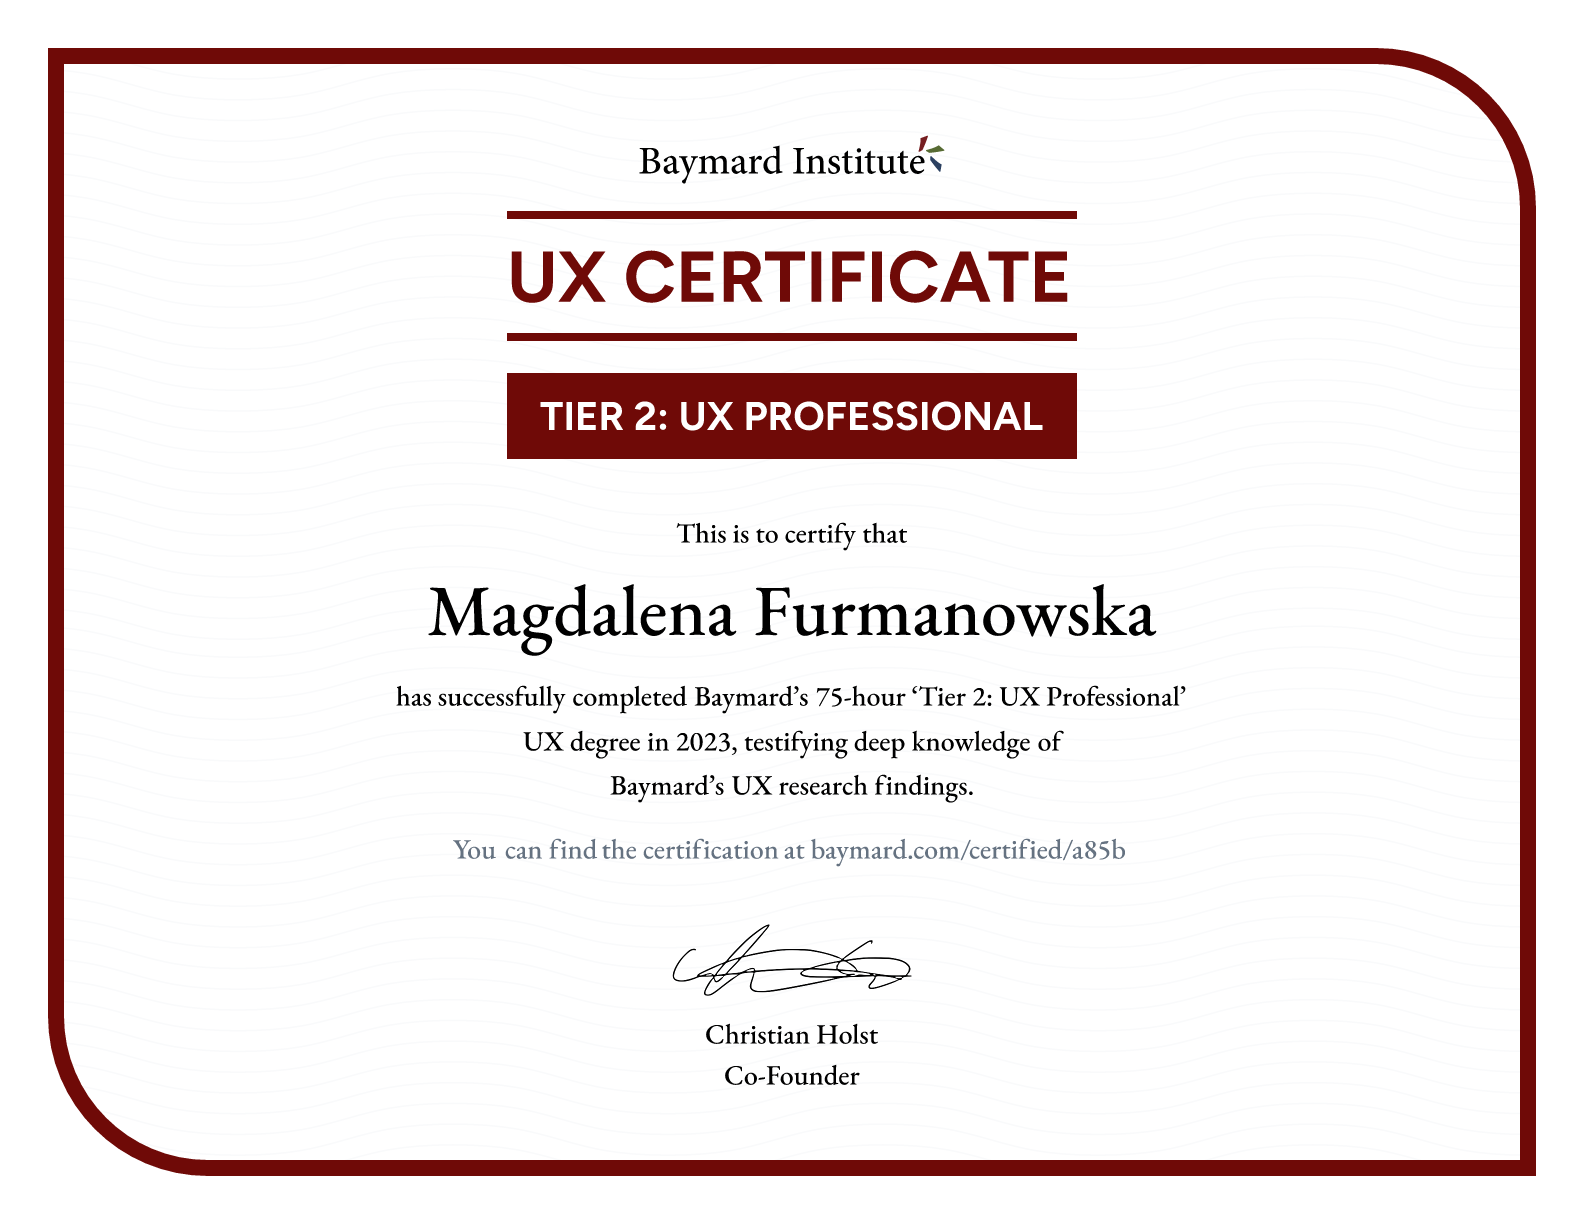 Magdalena Furmanowska’s certificate